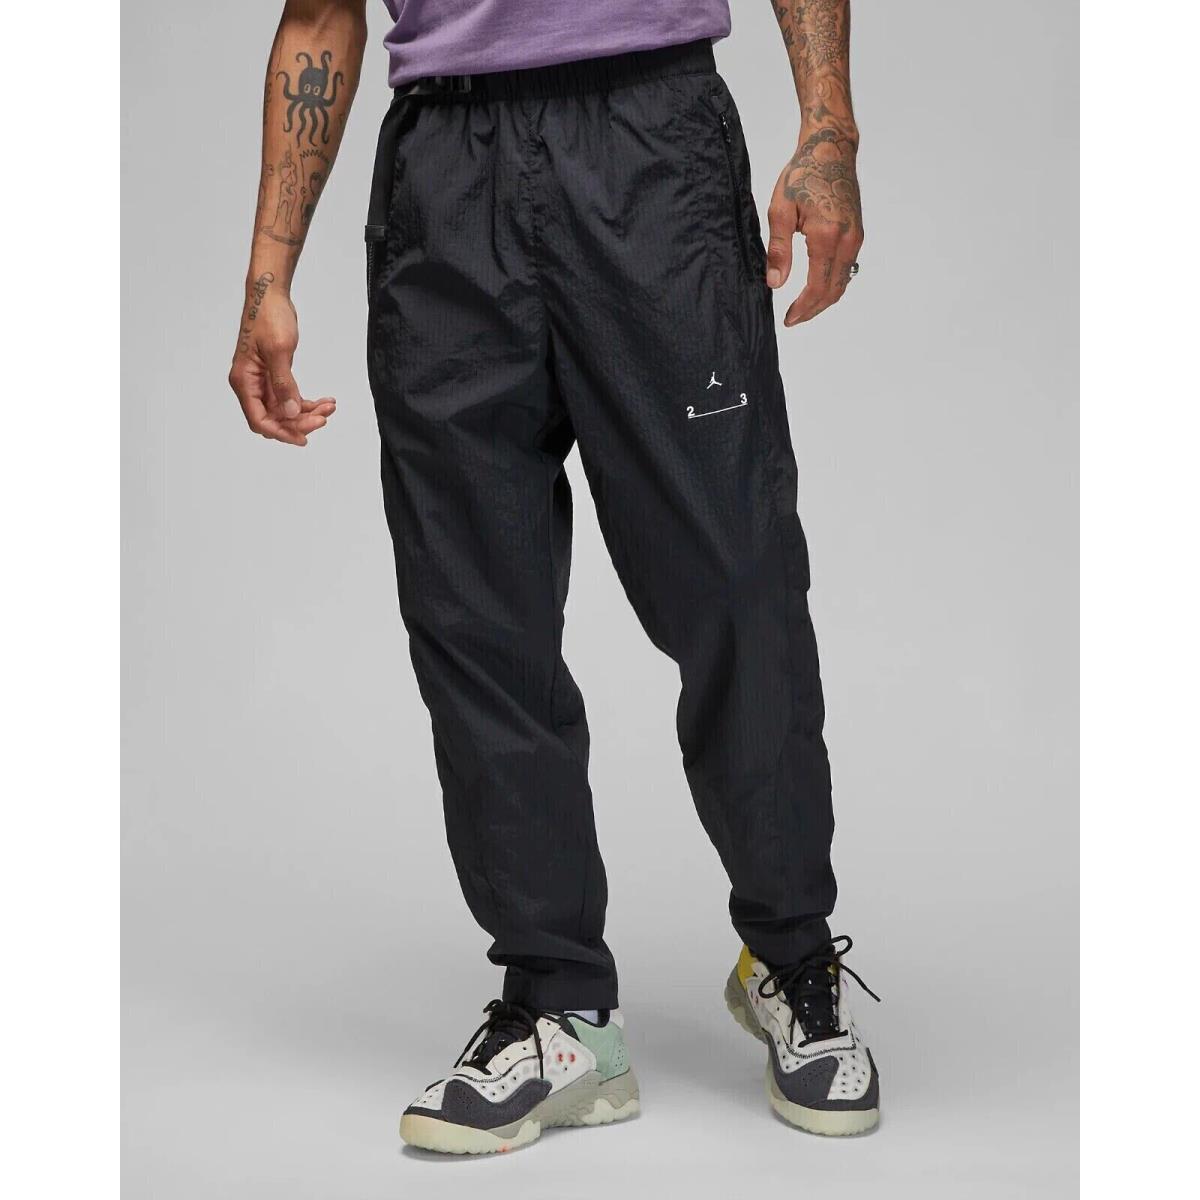 Nike Air Jordan 23 Engineered Black Woven Pants Mens Size XL DQ8066 010